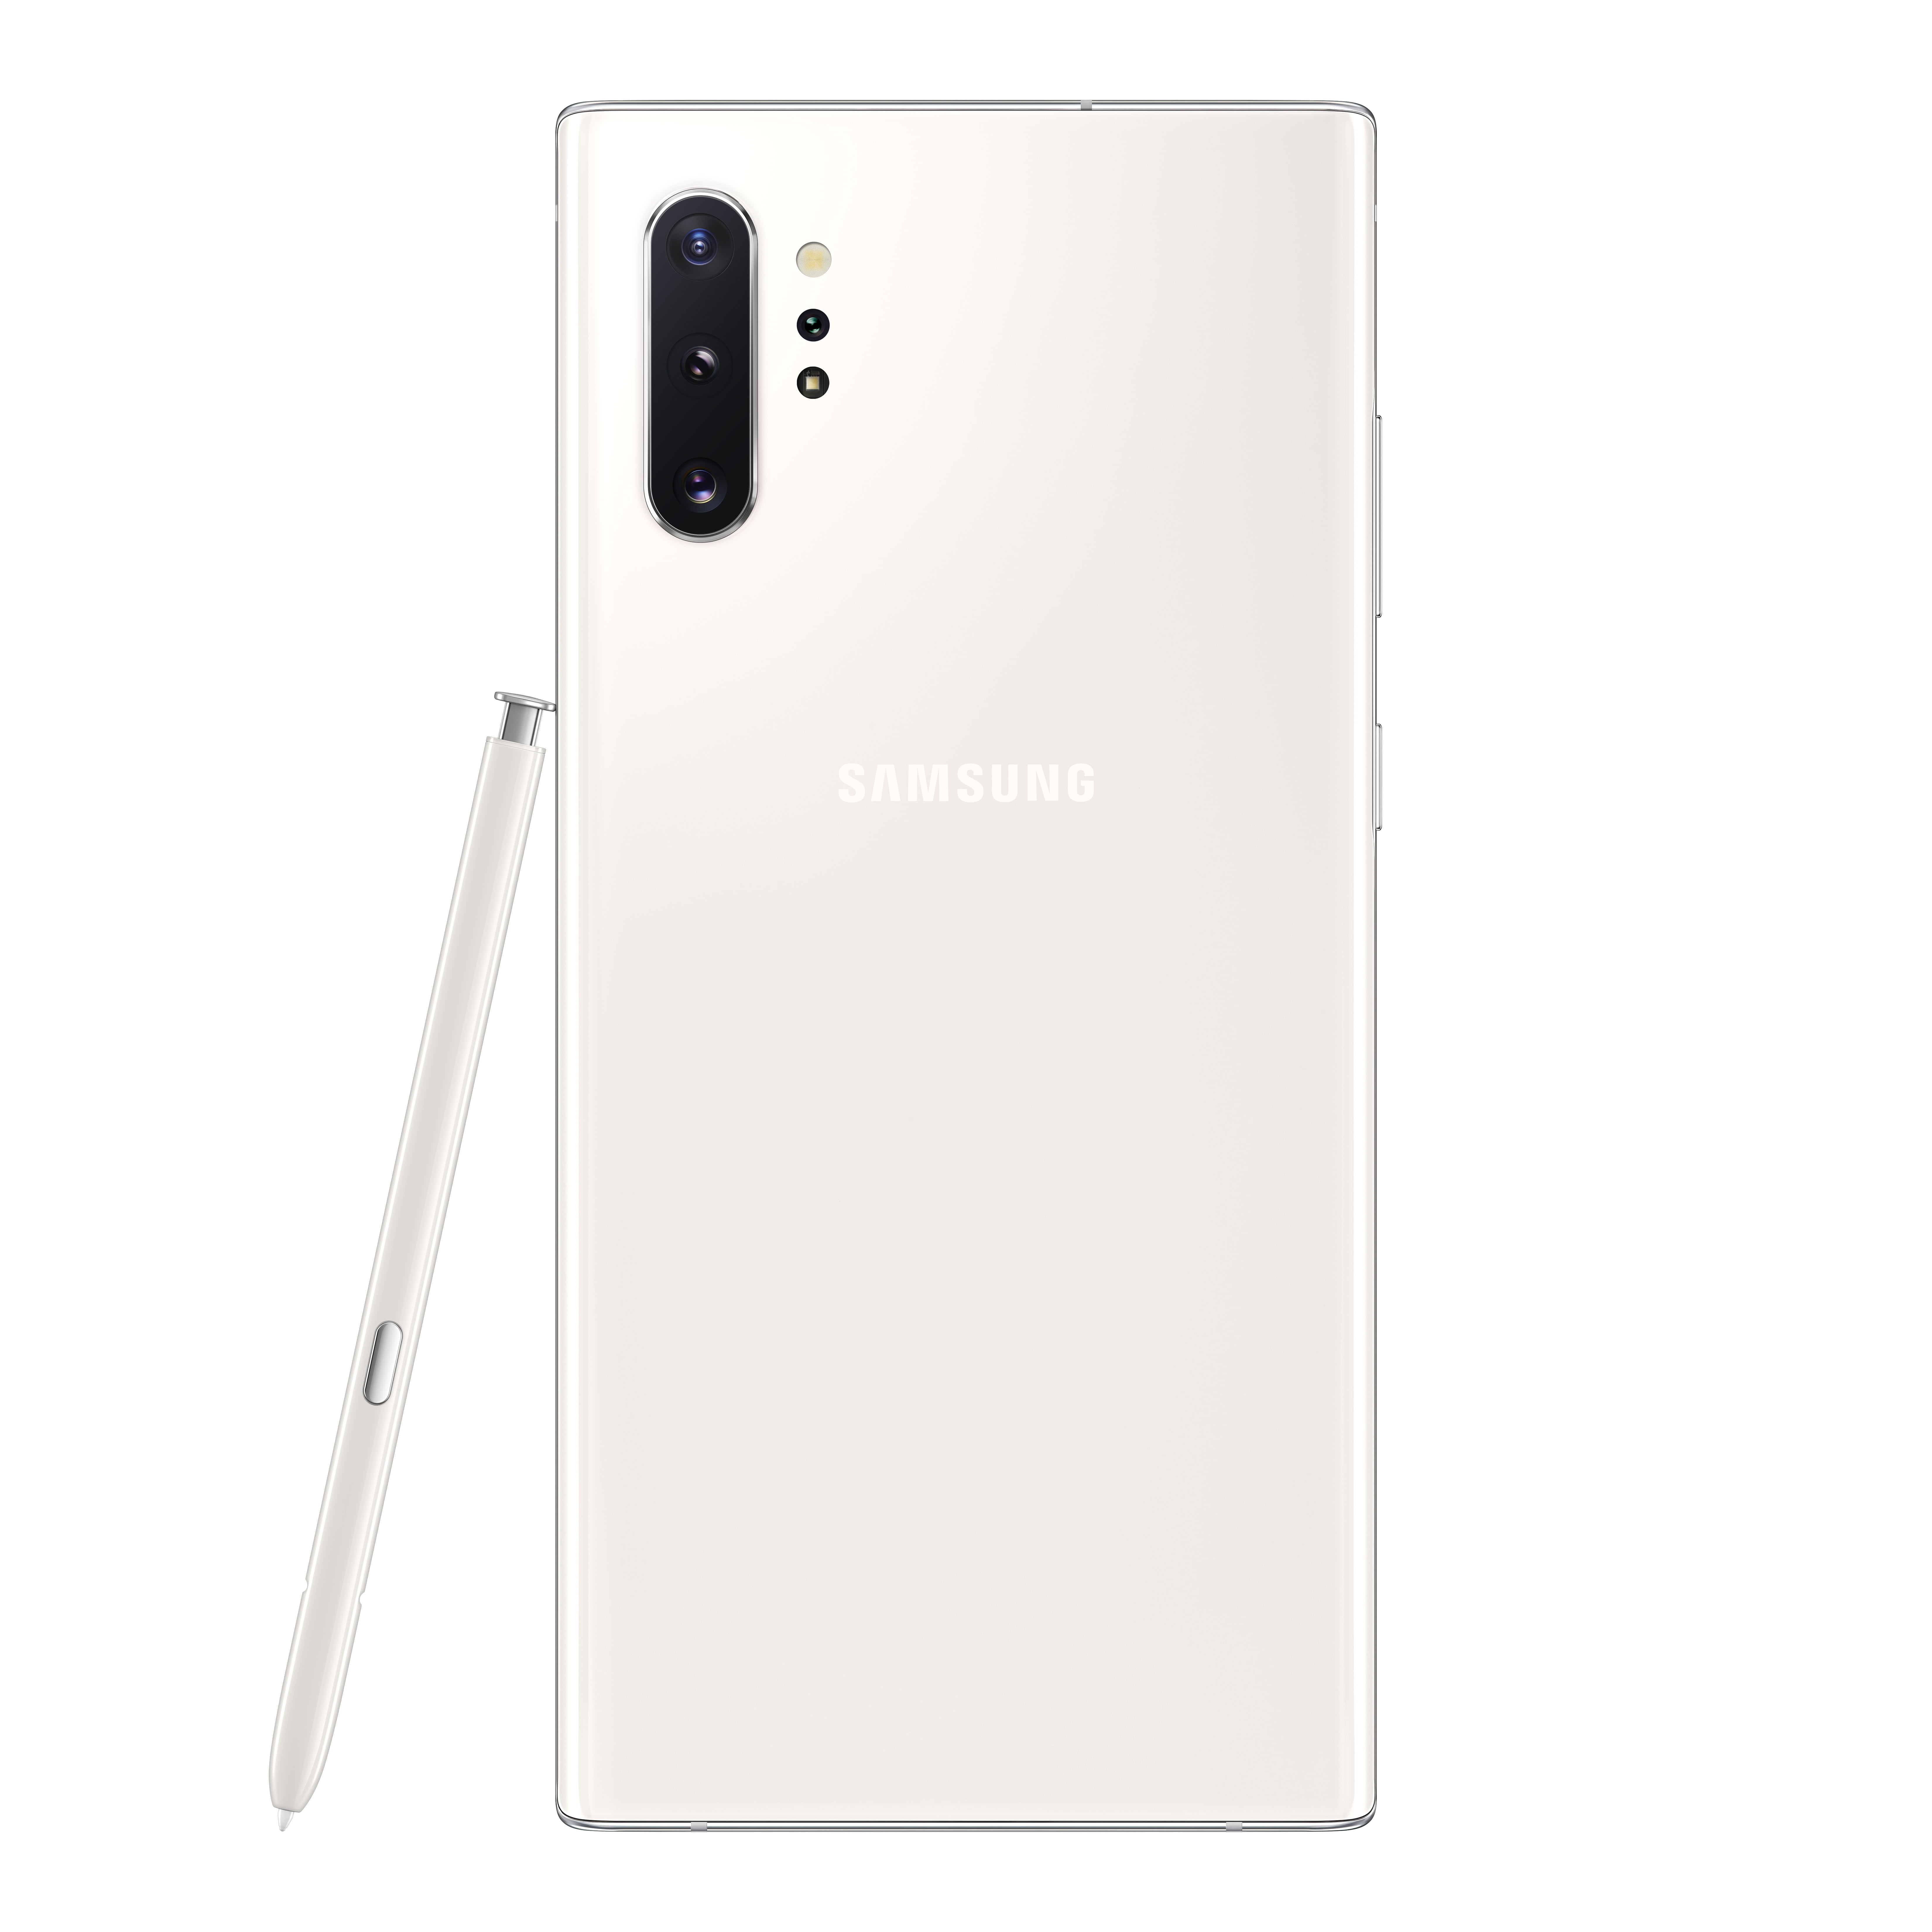 Samsung Galaxy Note10+ 256GB (Unlocked), Black - Walmart.com